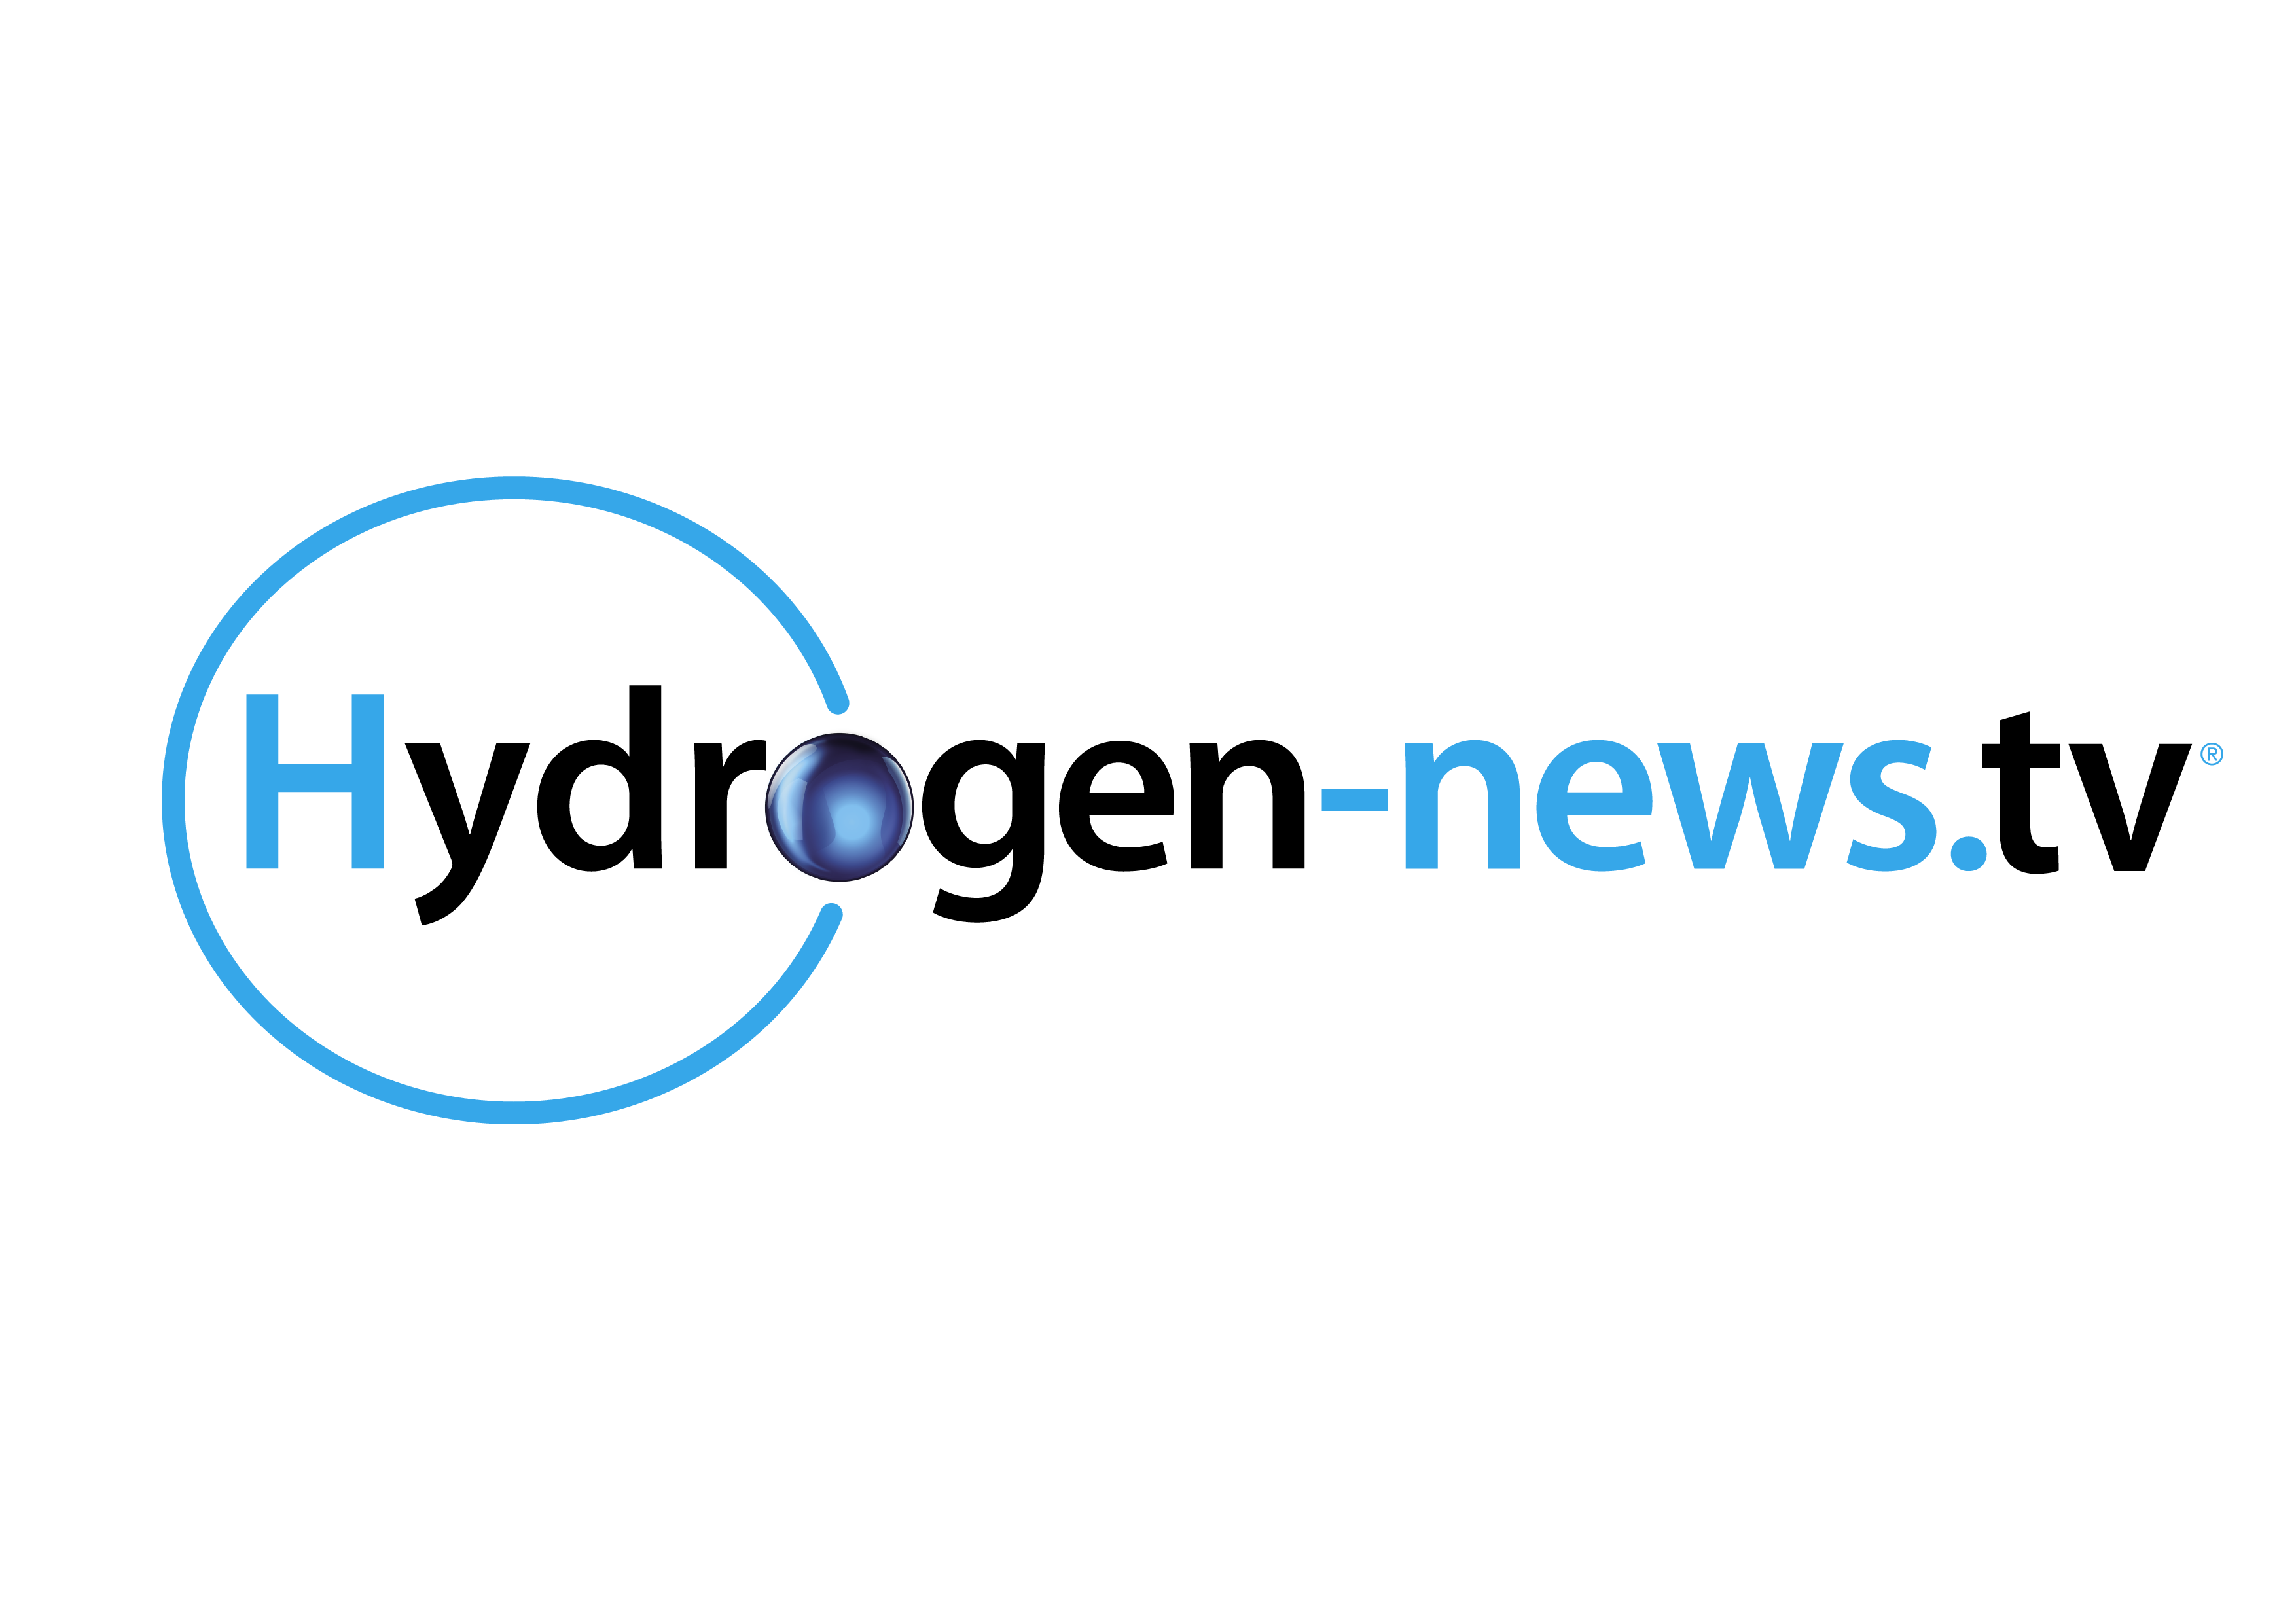 (c) Hydrogen-news.tv